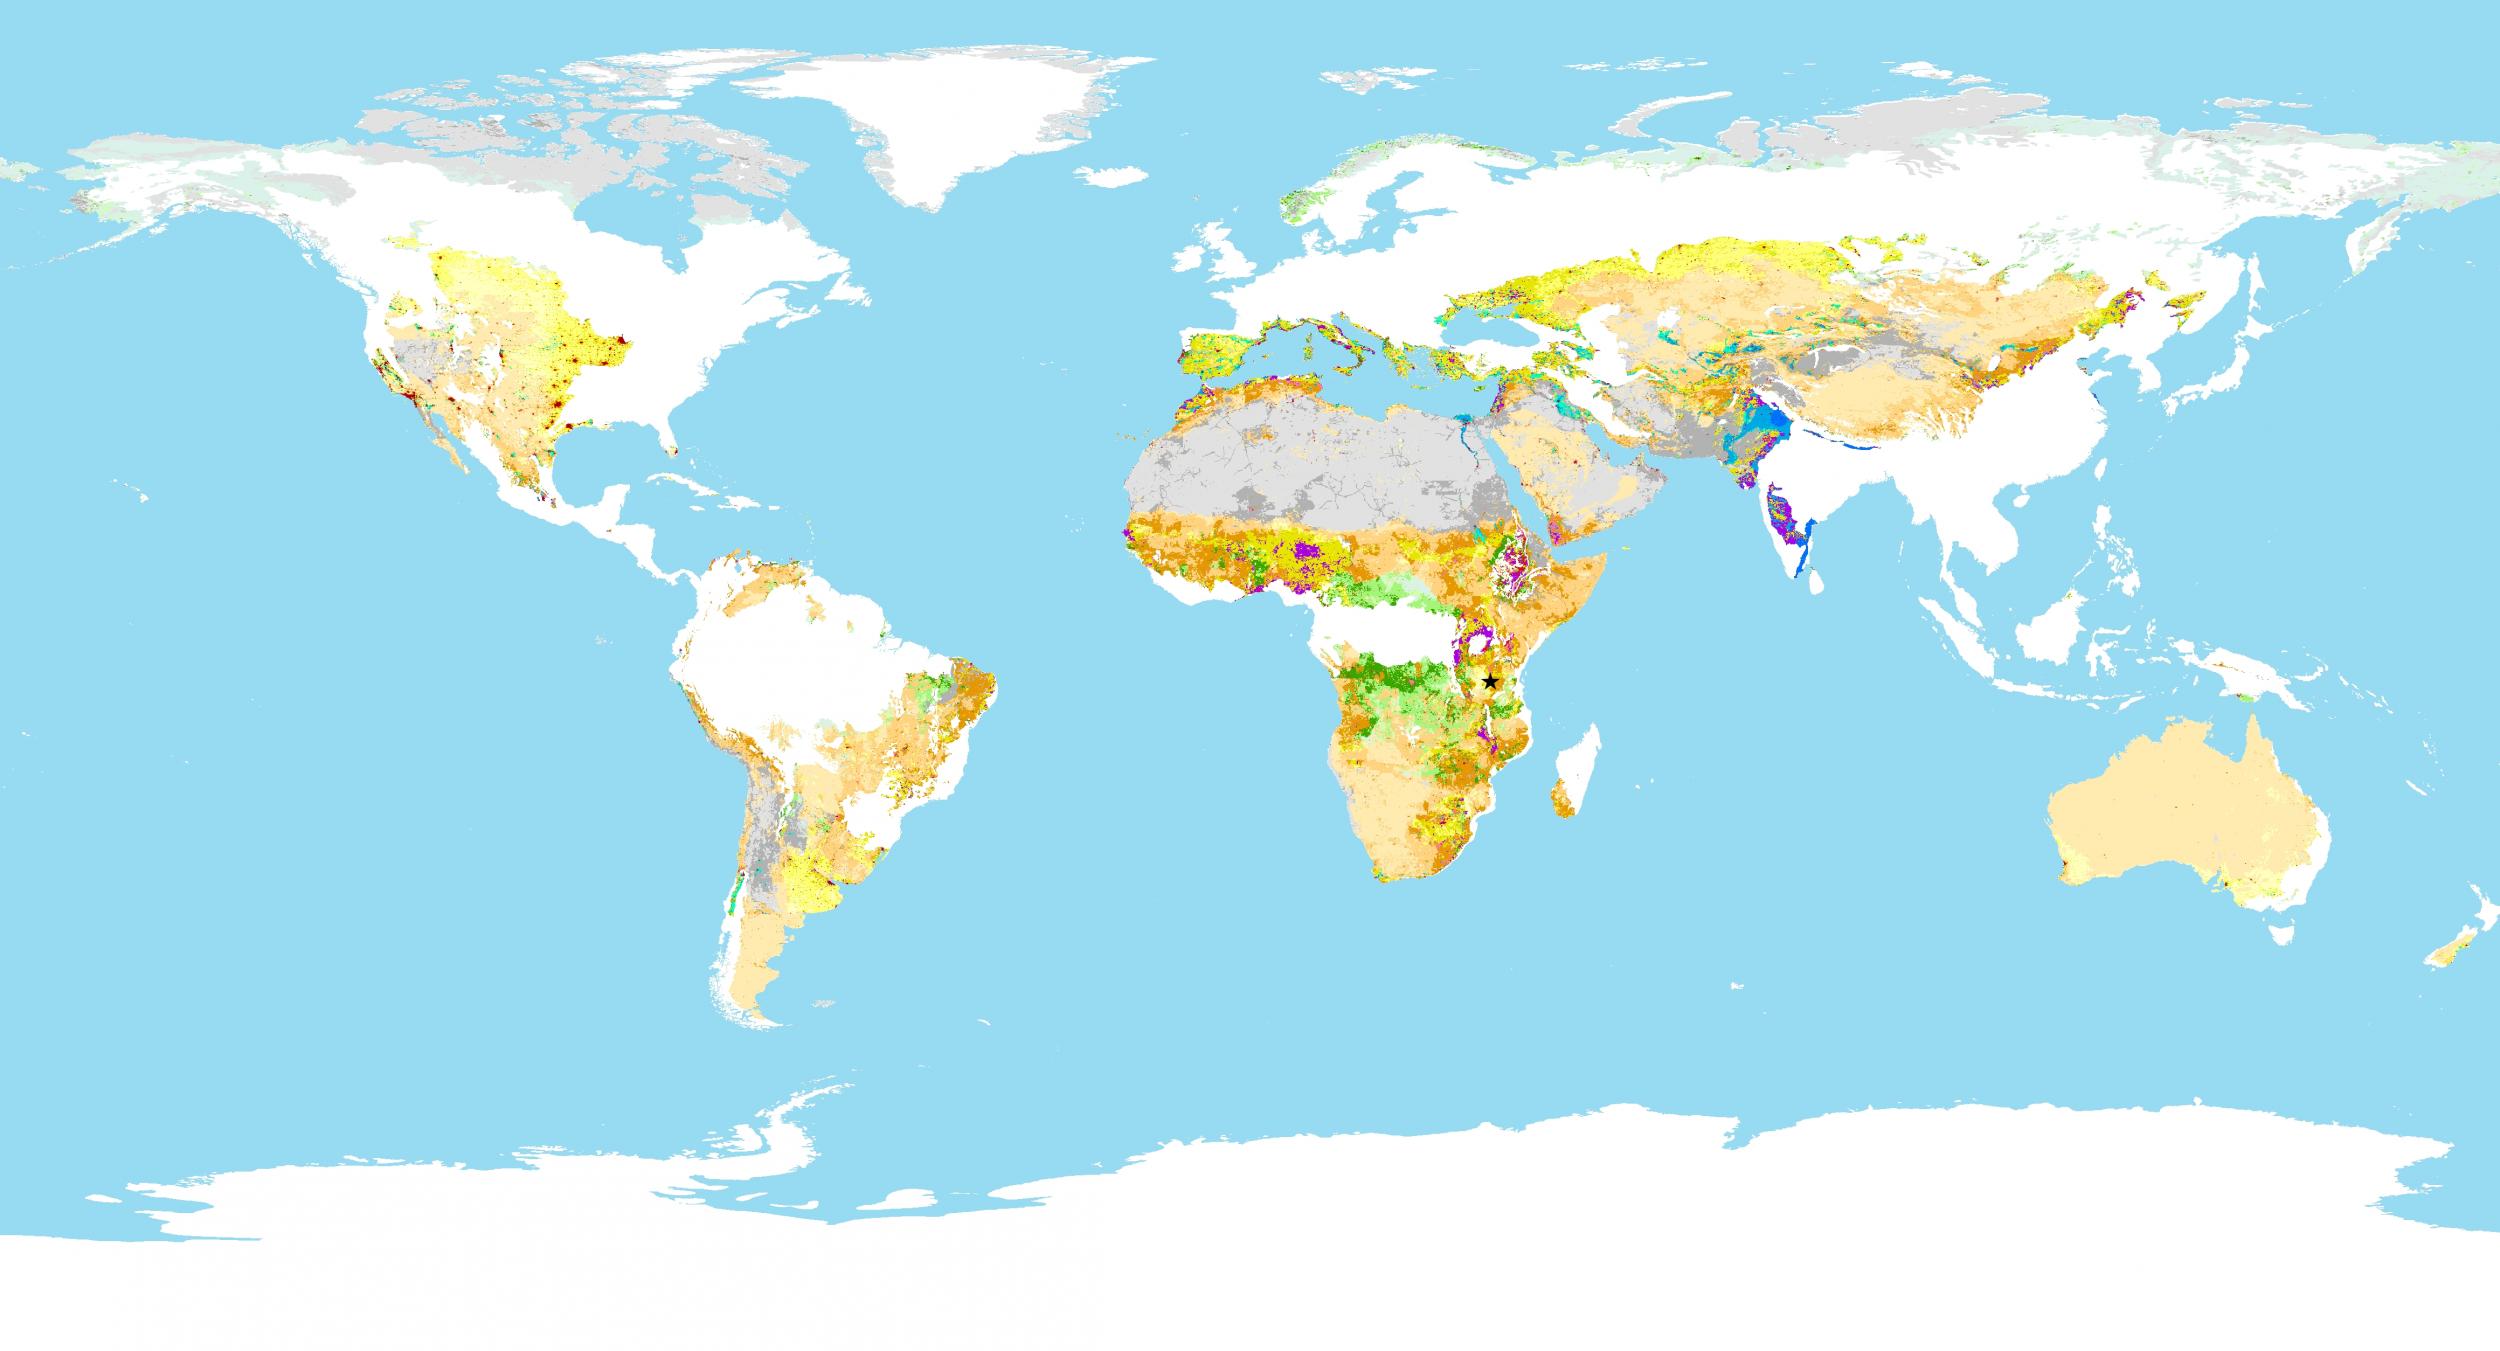 Anthropogenic biomes found in rangeland globally (Year 2000)